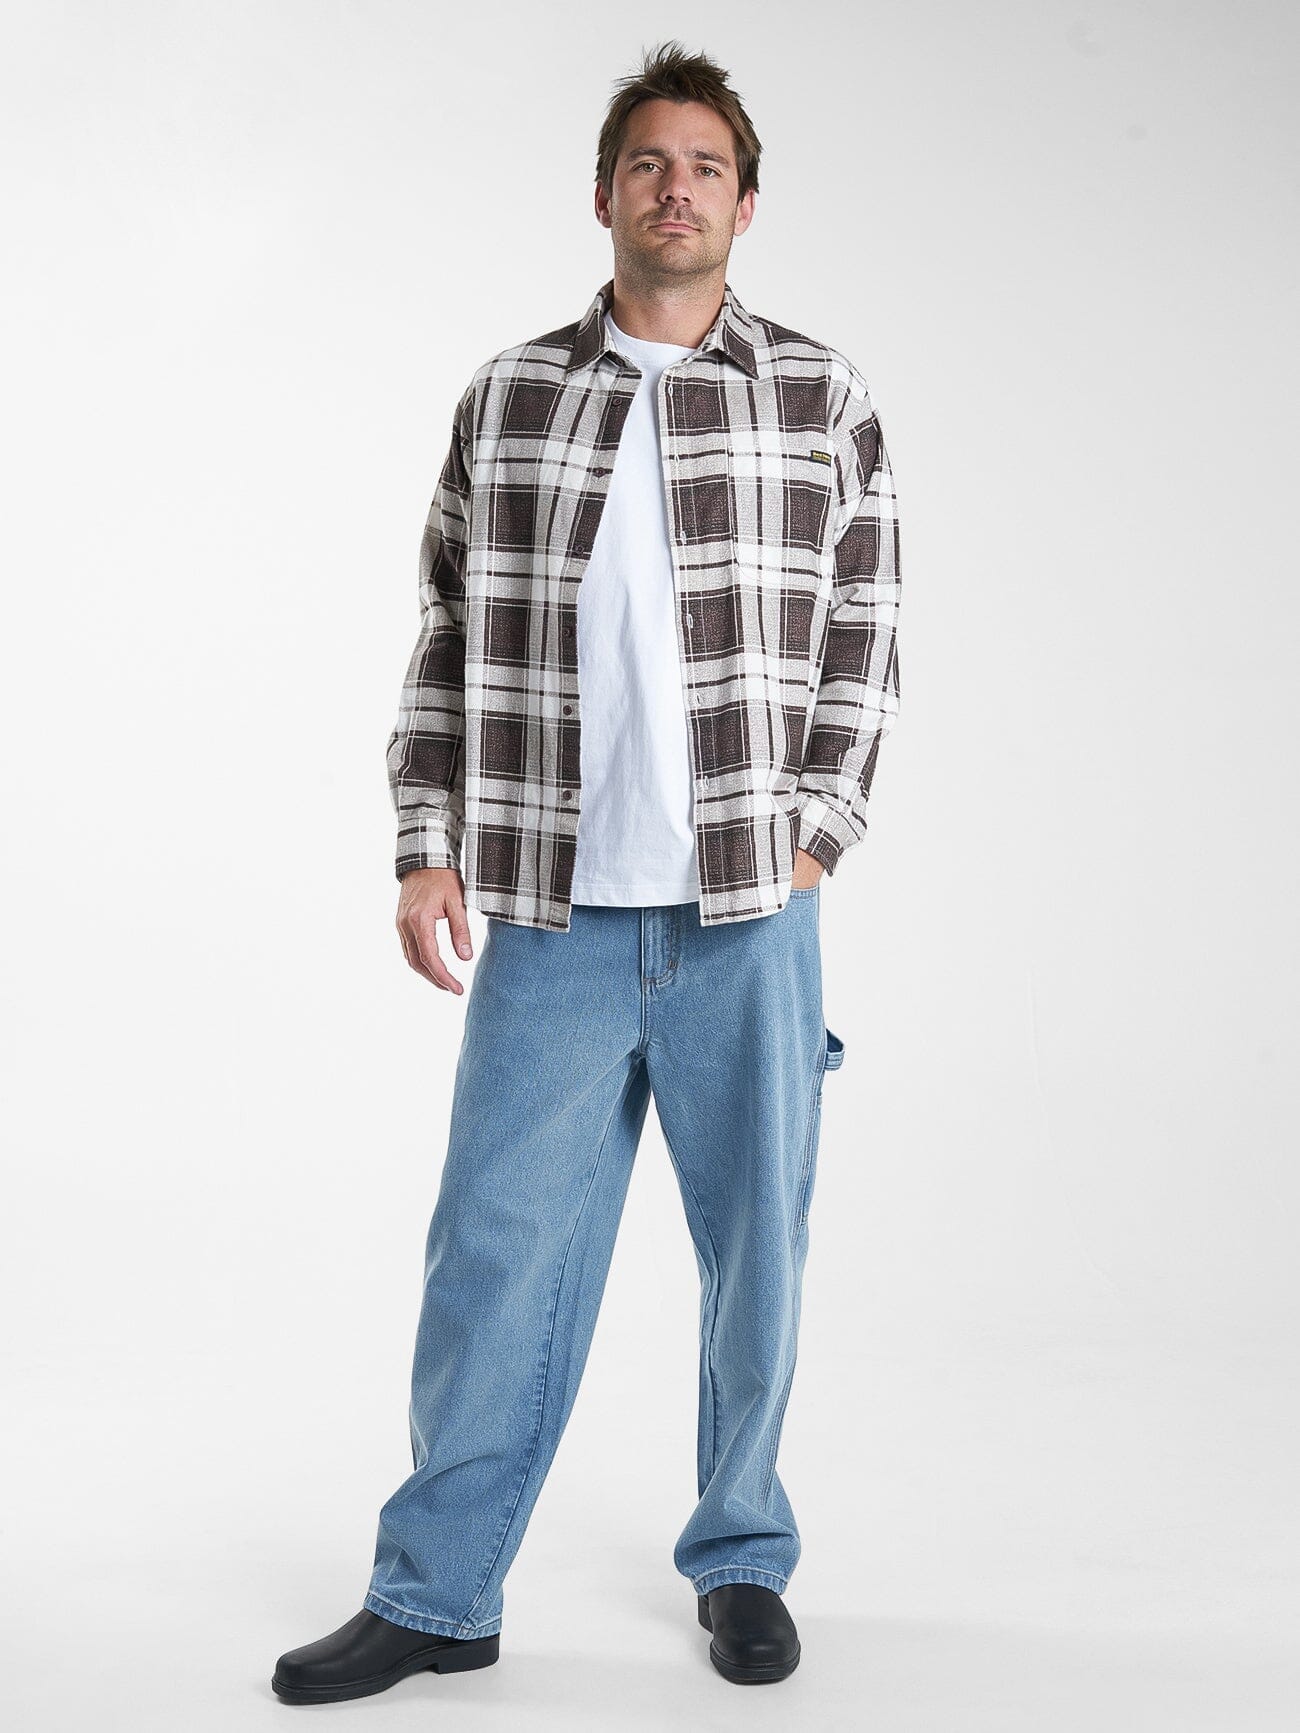 Hard Yakka X Thrills Flannel Sleeve Shirt - Postal Brown